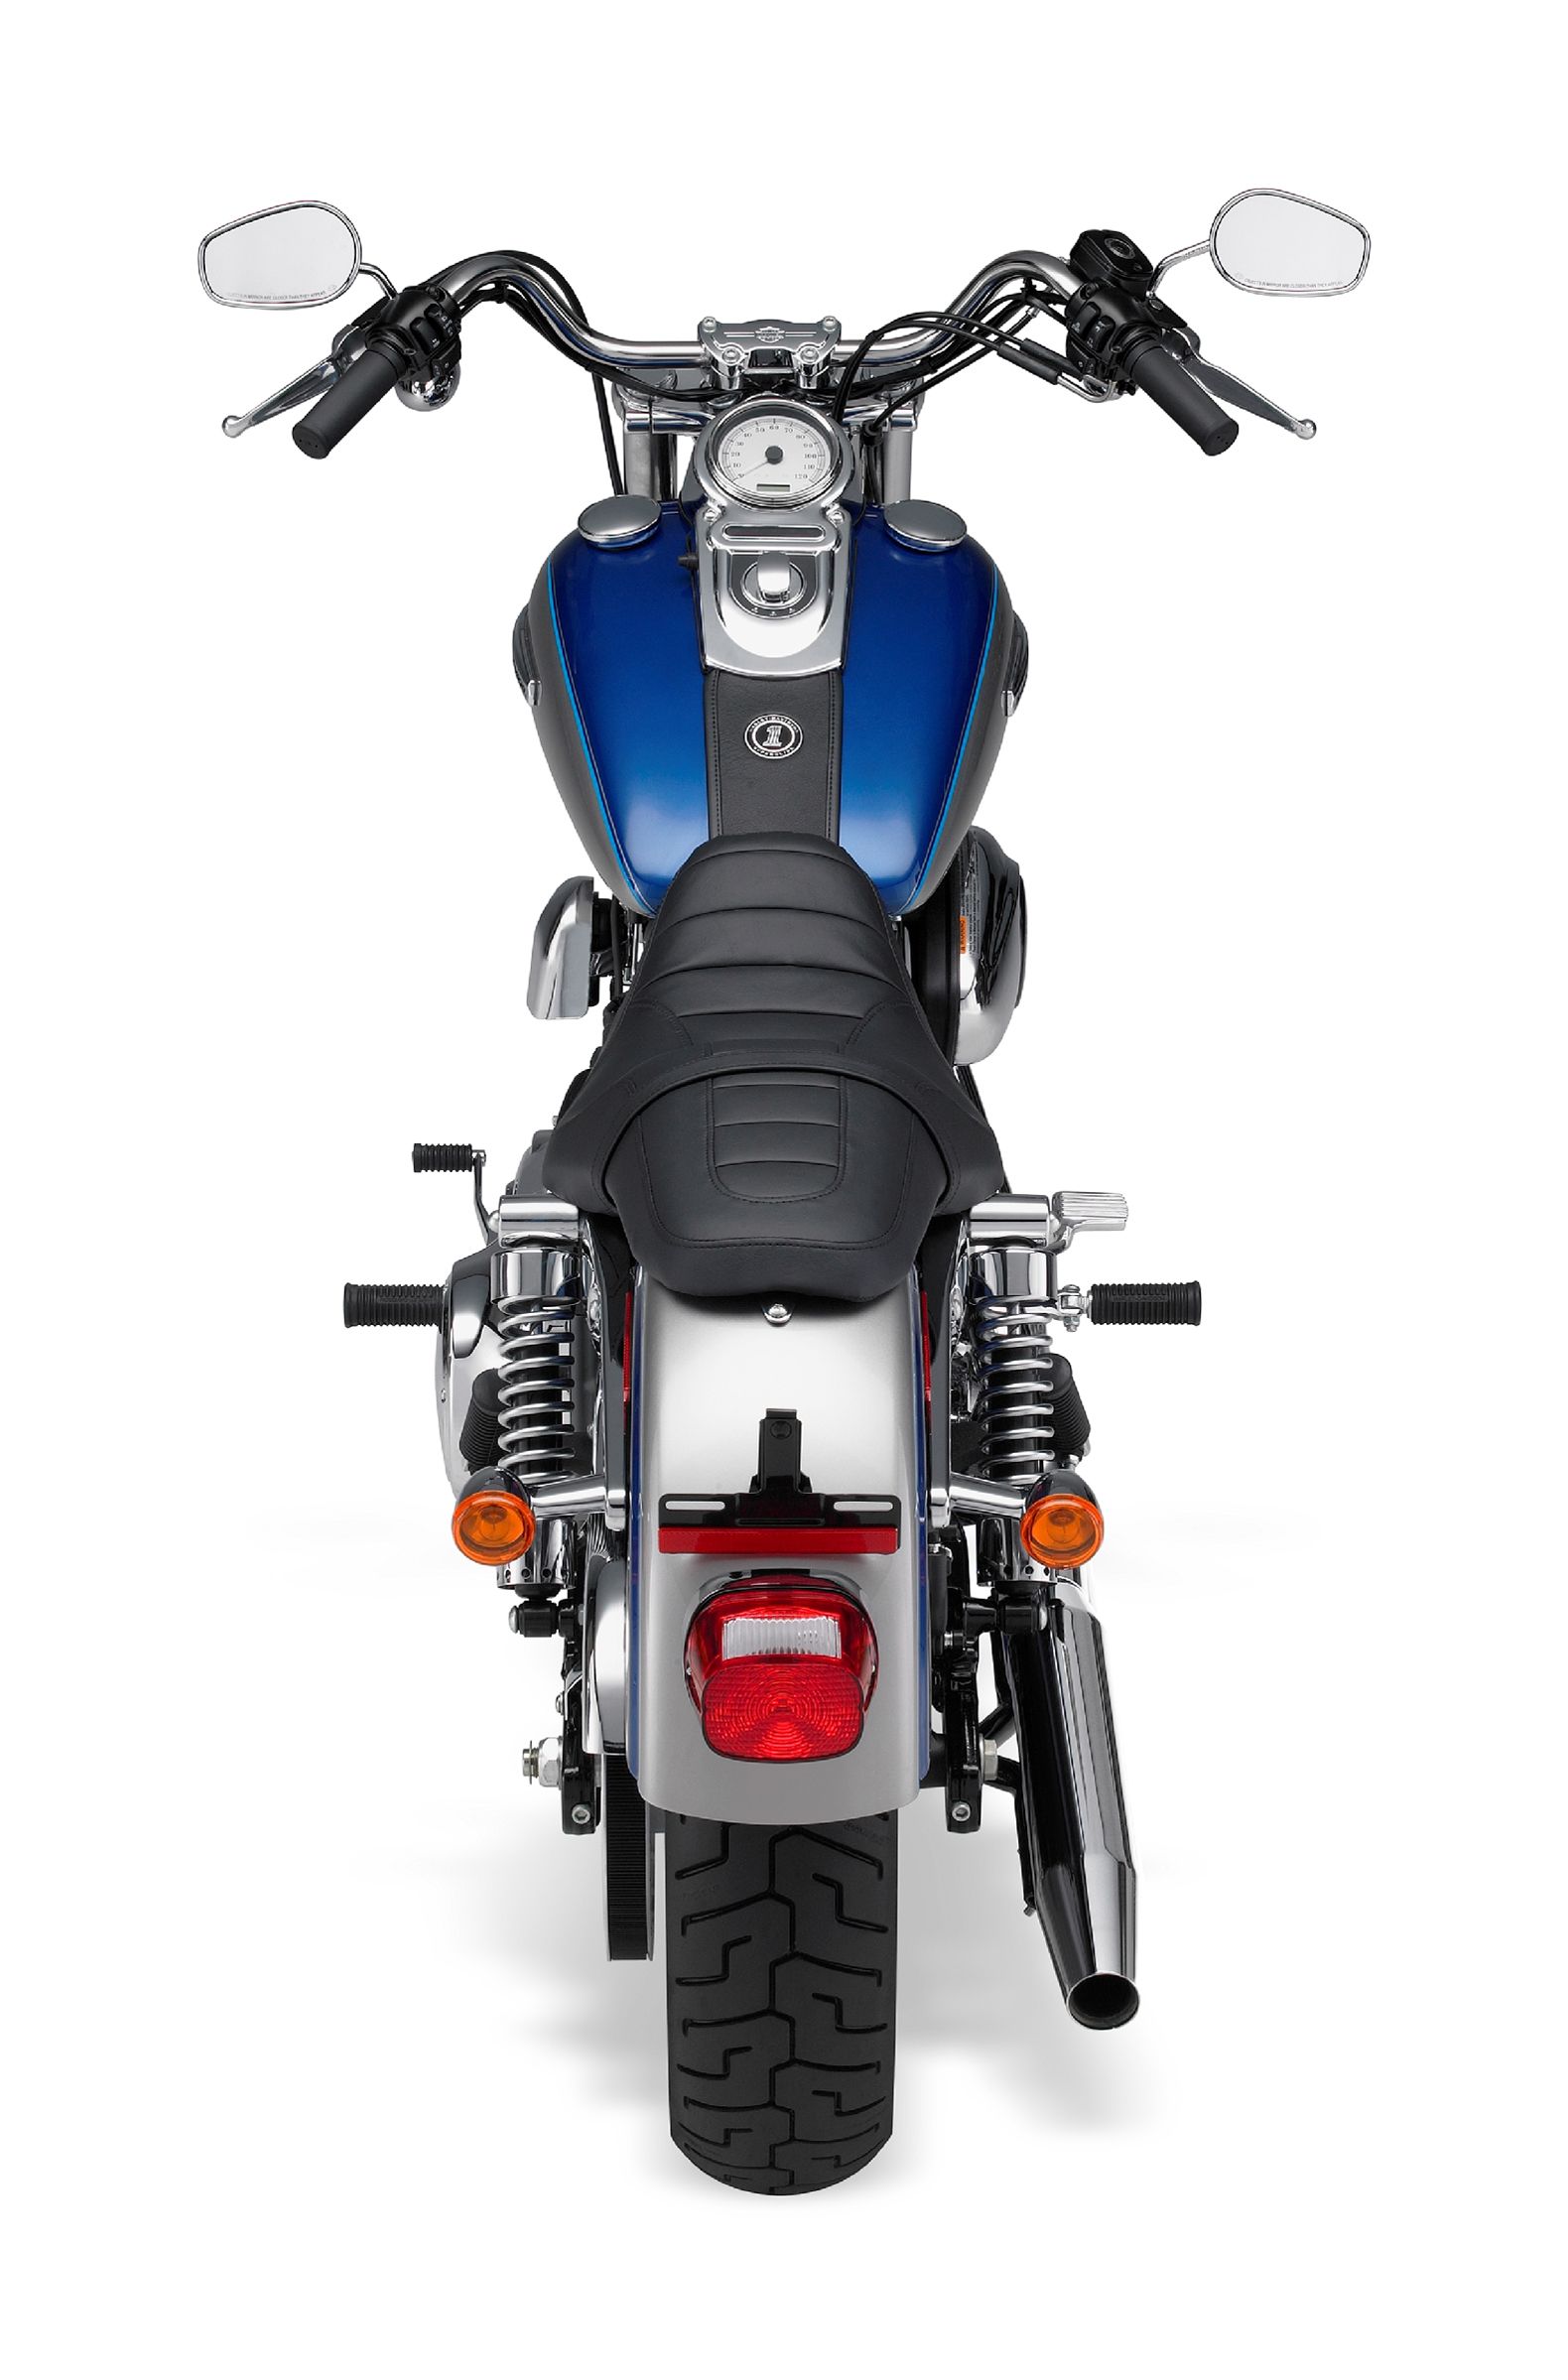  2009 Harley-Davidson Dyna Super Glide Custom